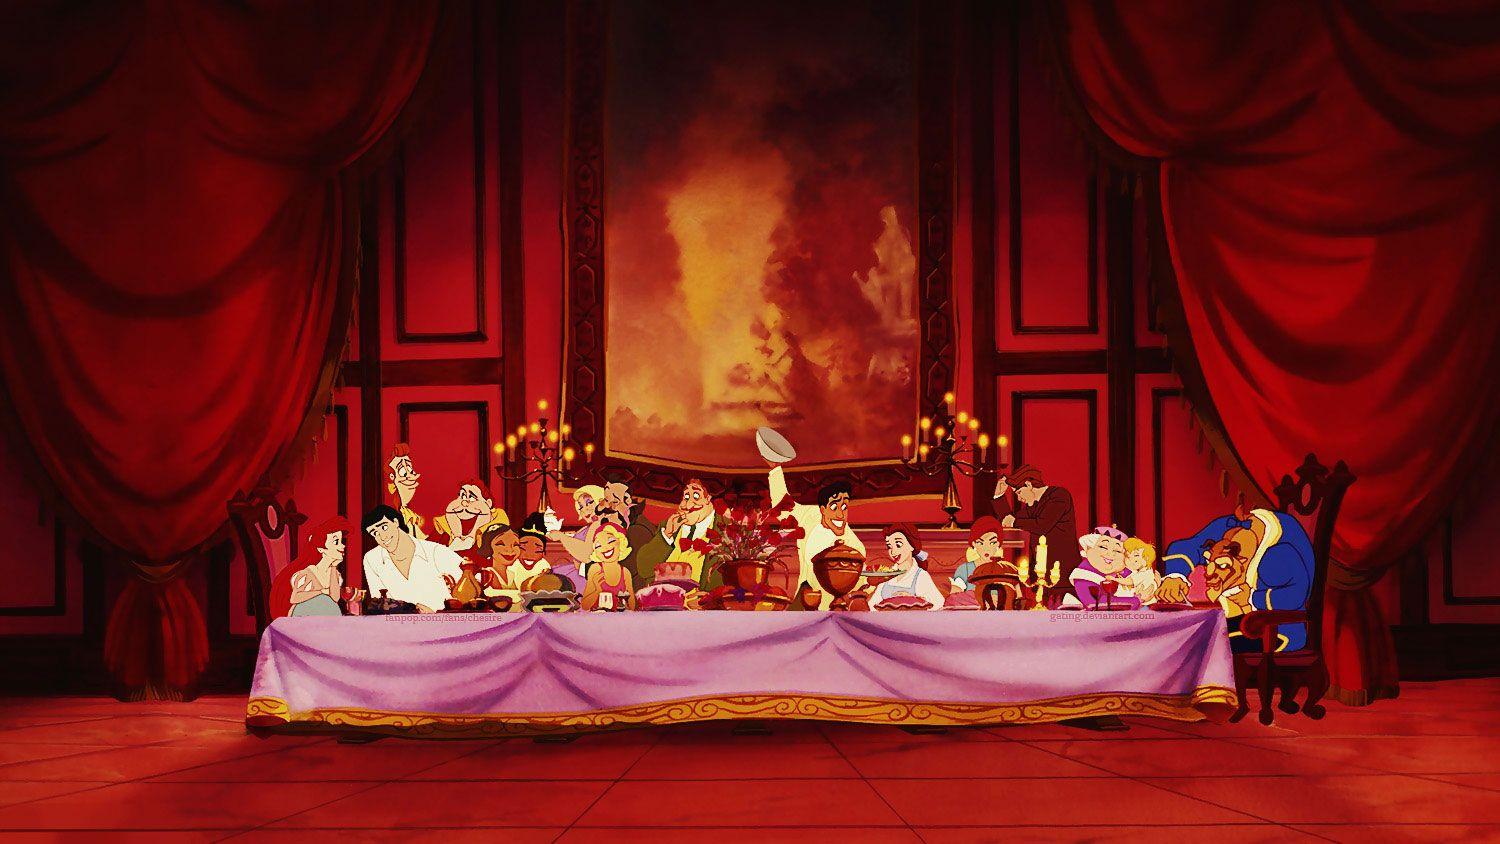 Disney Thanksgiving desktop wallpaper background with Ariel, Belle